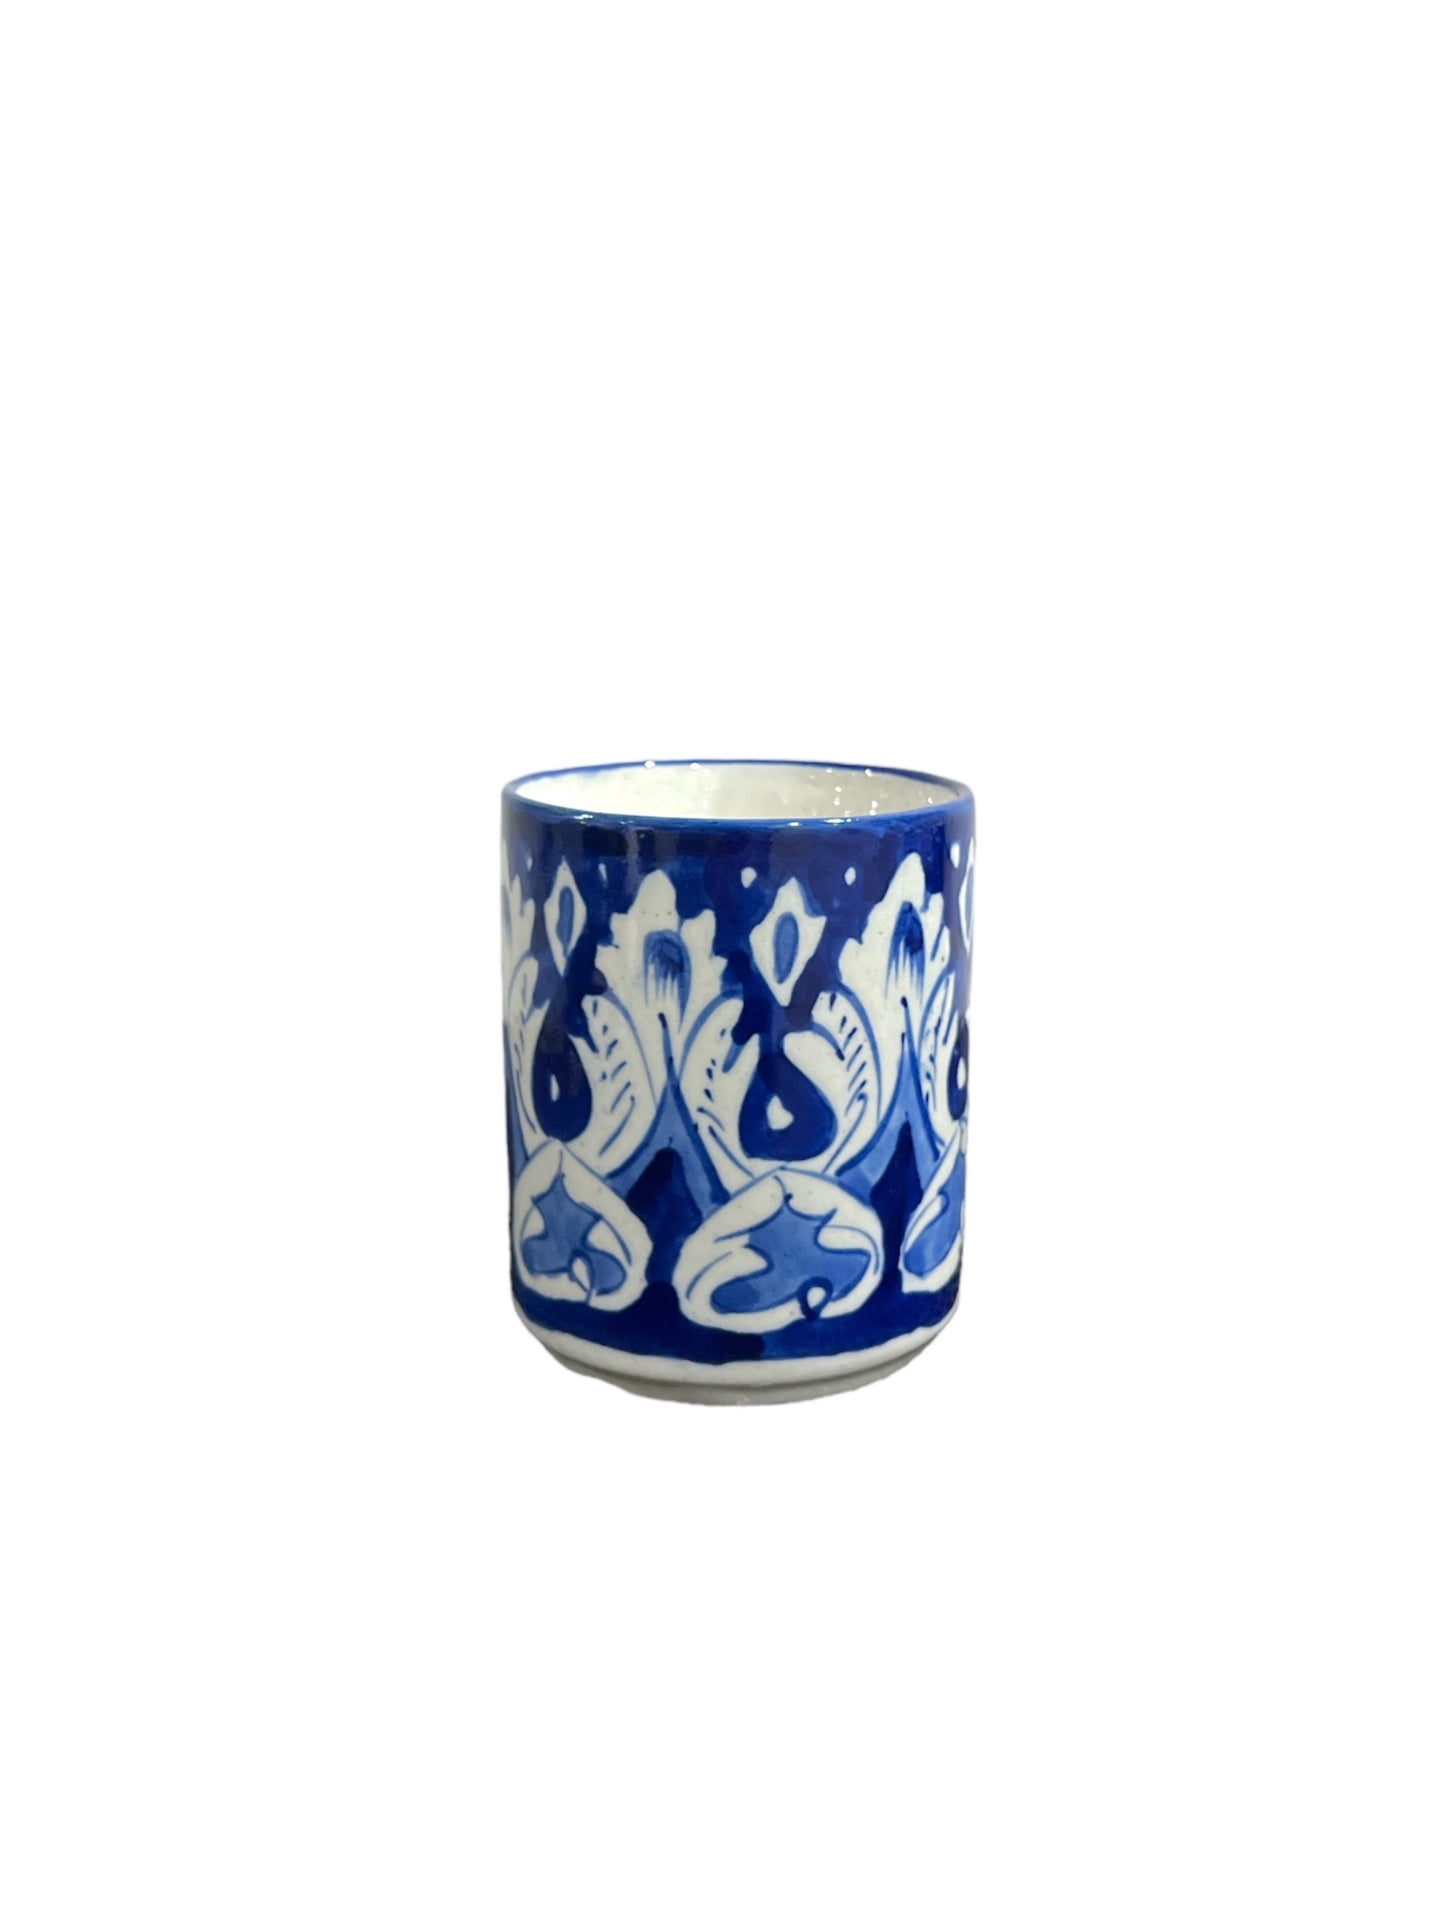 Blue Pottery Tea Coffee Mug - White Floral Design (Set of 2)